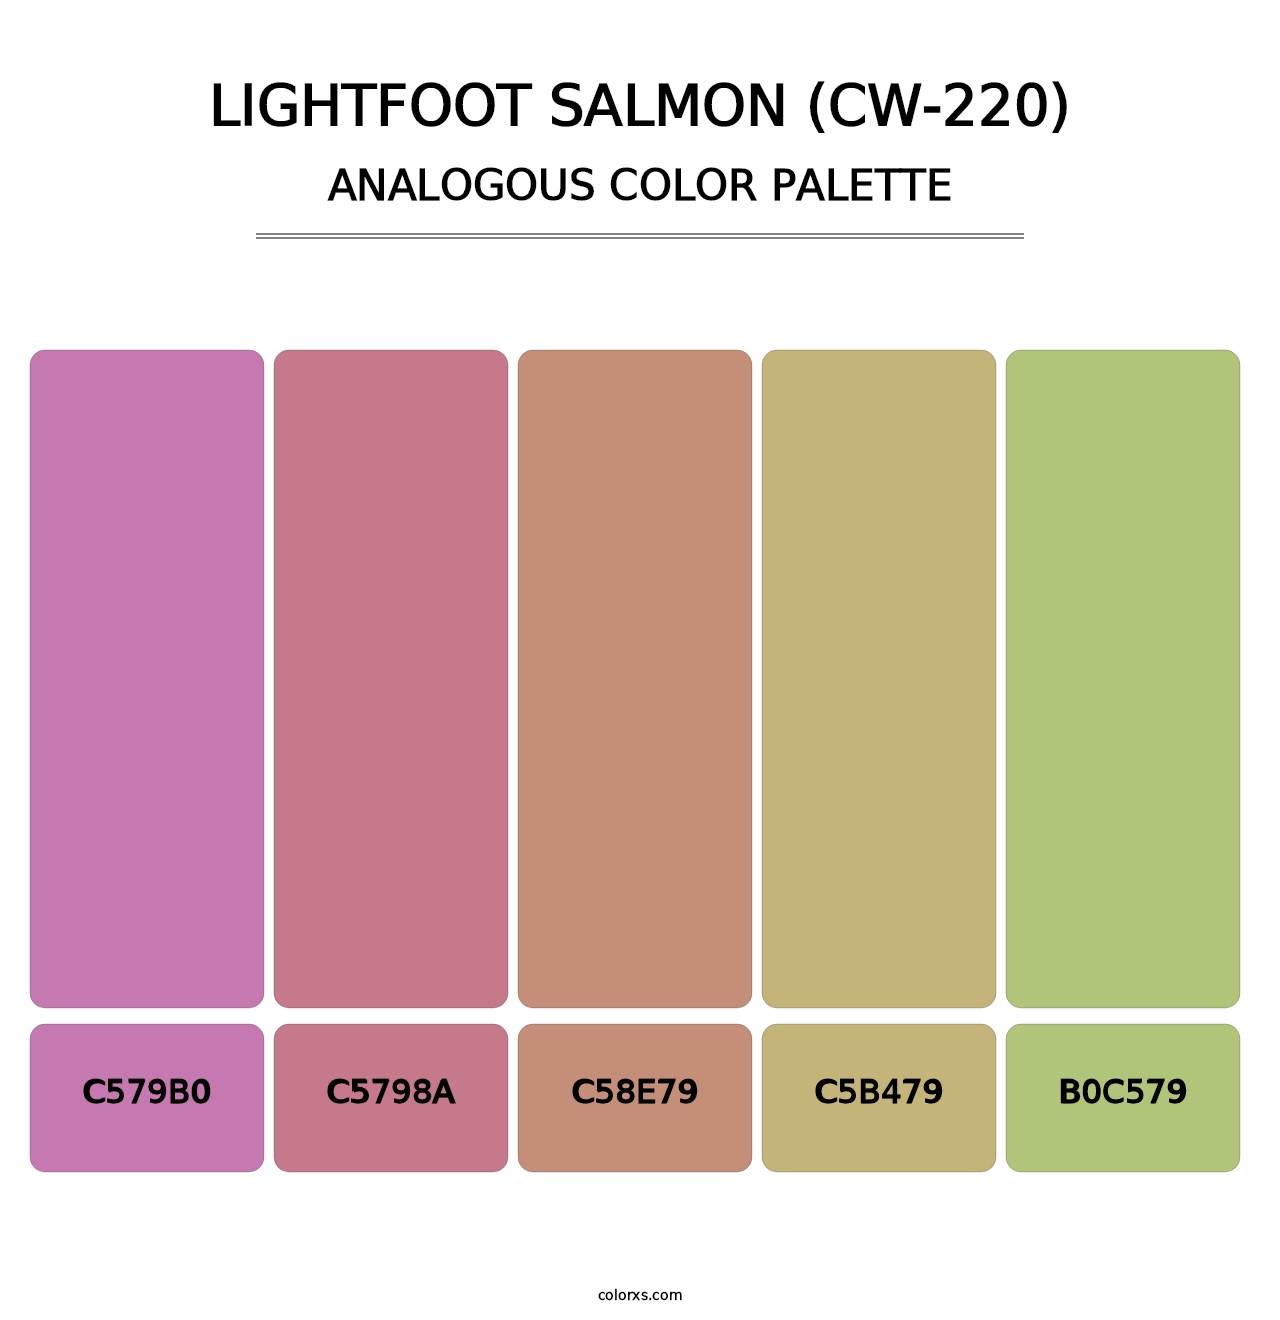 Lightfoot Salmon (CW-220) - Analogous Color Palette